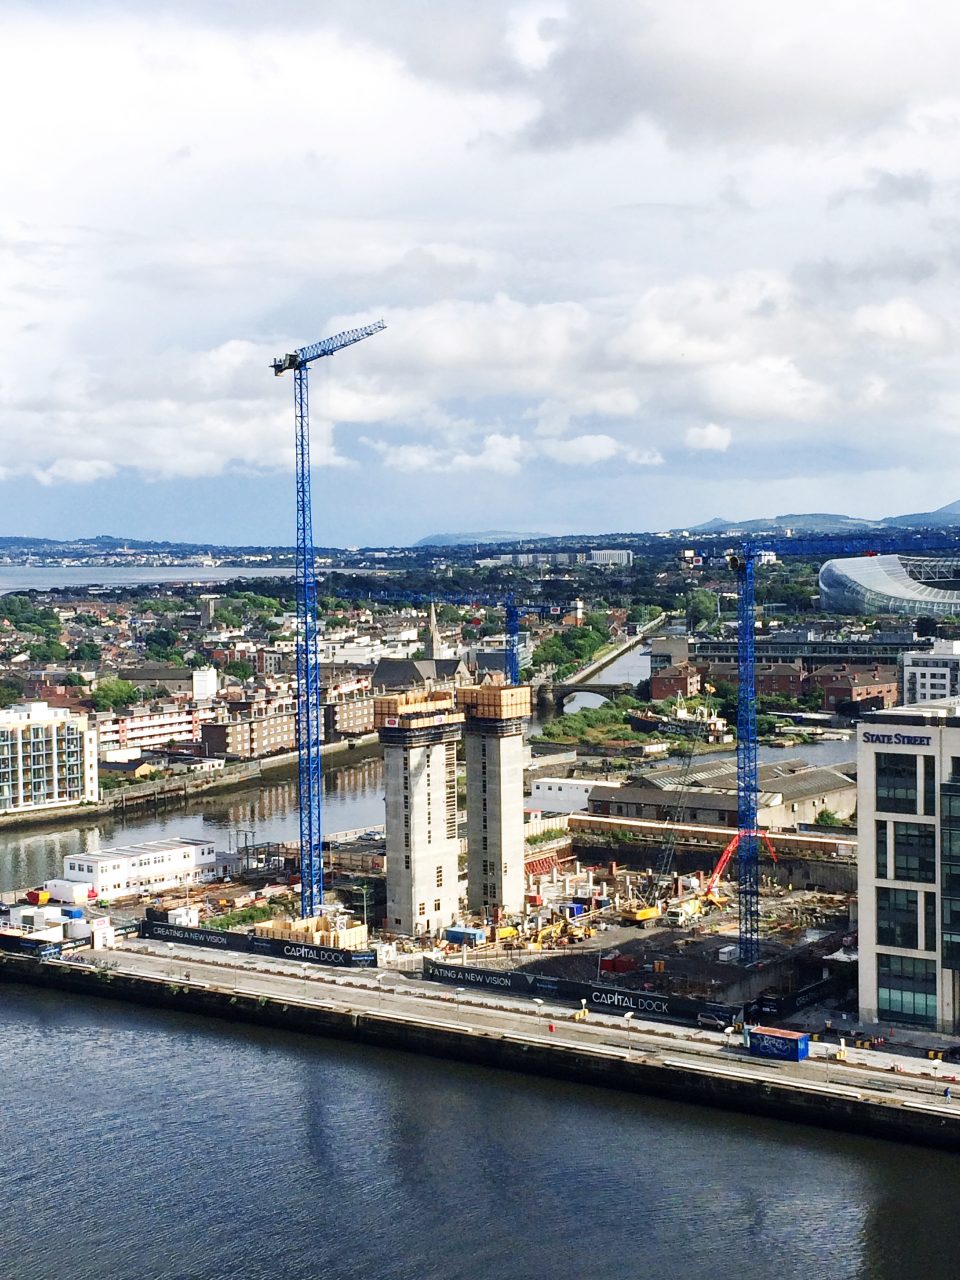 Irish Cranes currently has five cranes erected at the Capital Dock jobsite in Dublin, Ireland